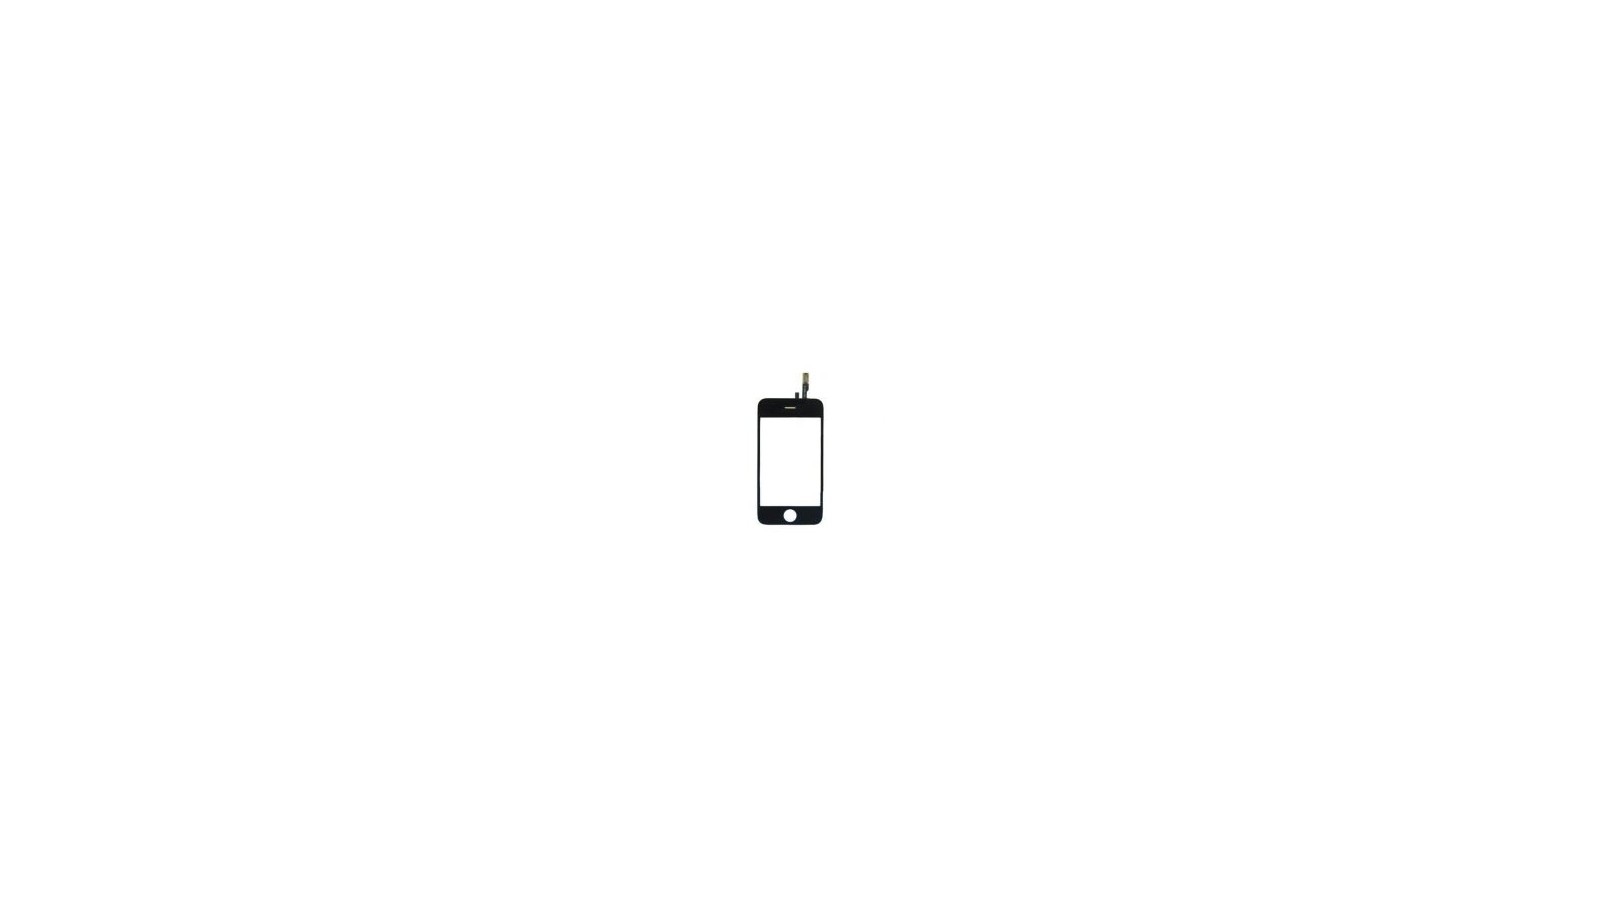 Touch screen vetro completo  per Apple iPhone 3G